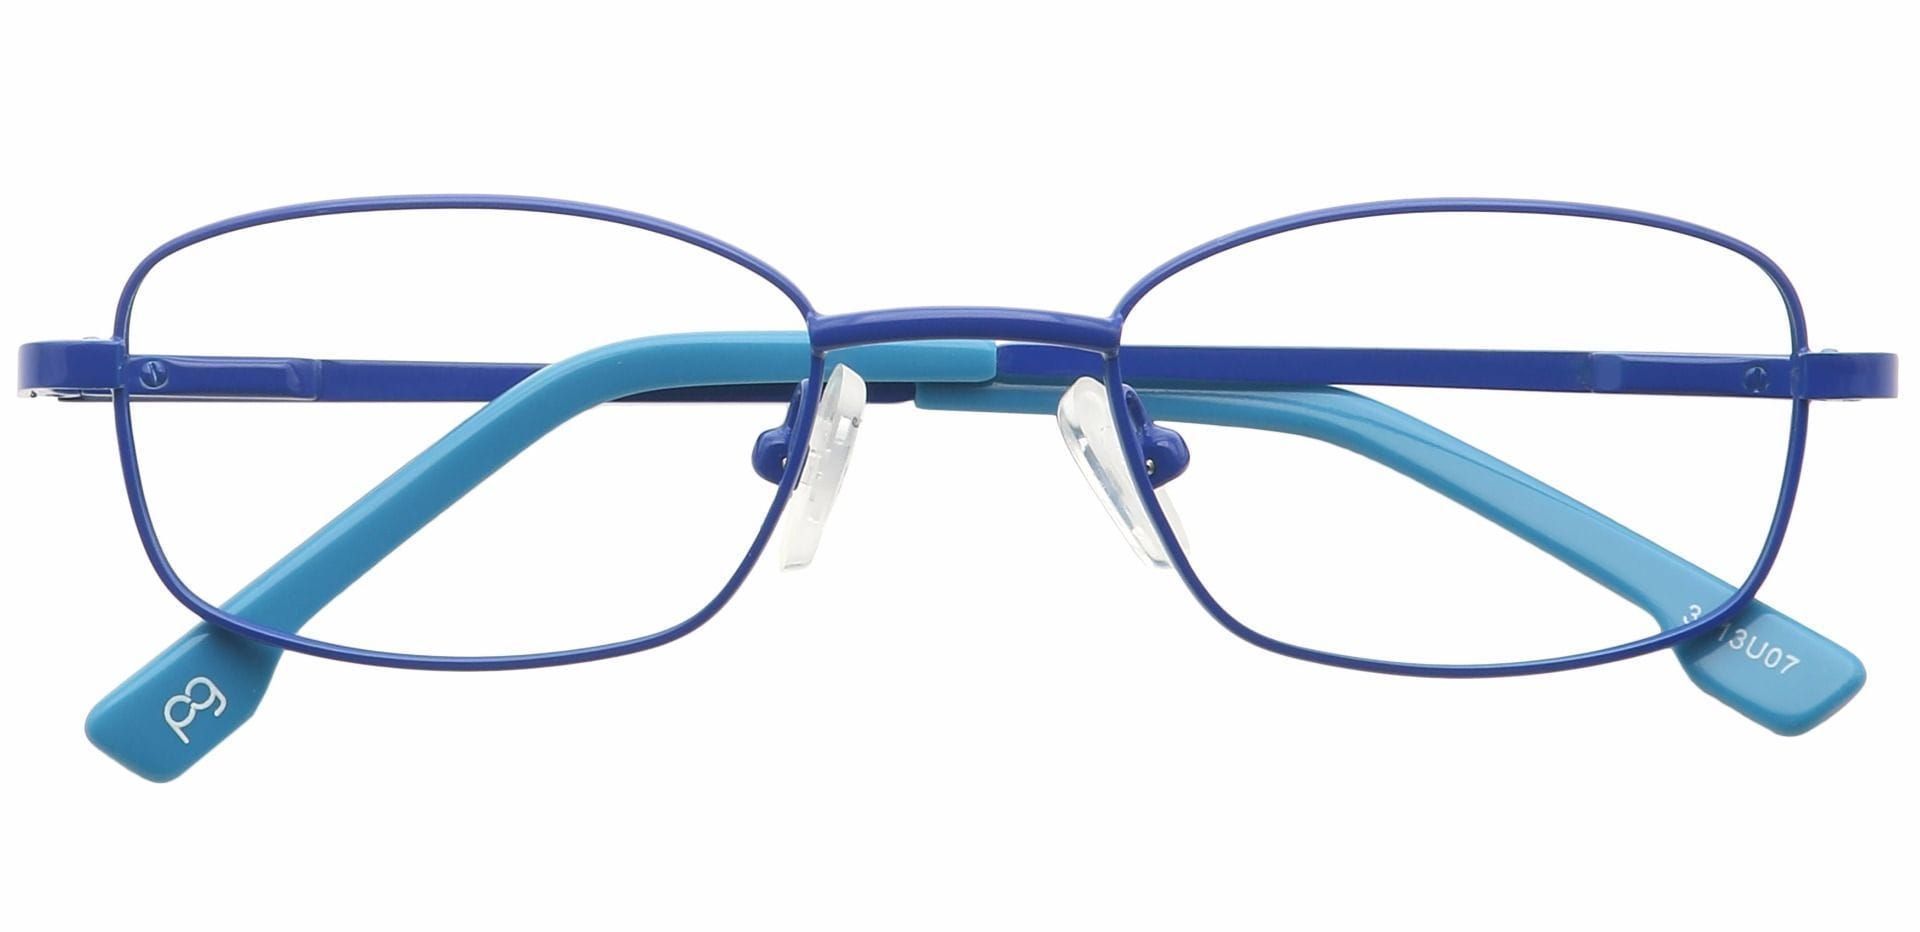 Gil Rectangle Eyeglasses Frame - Blue